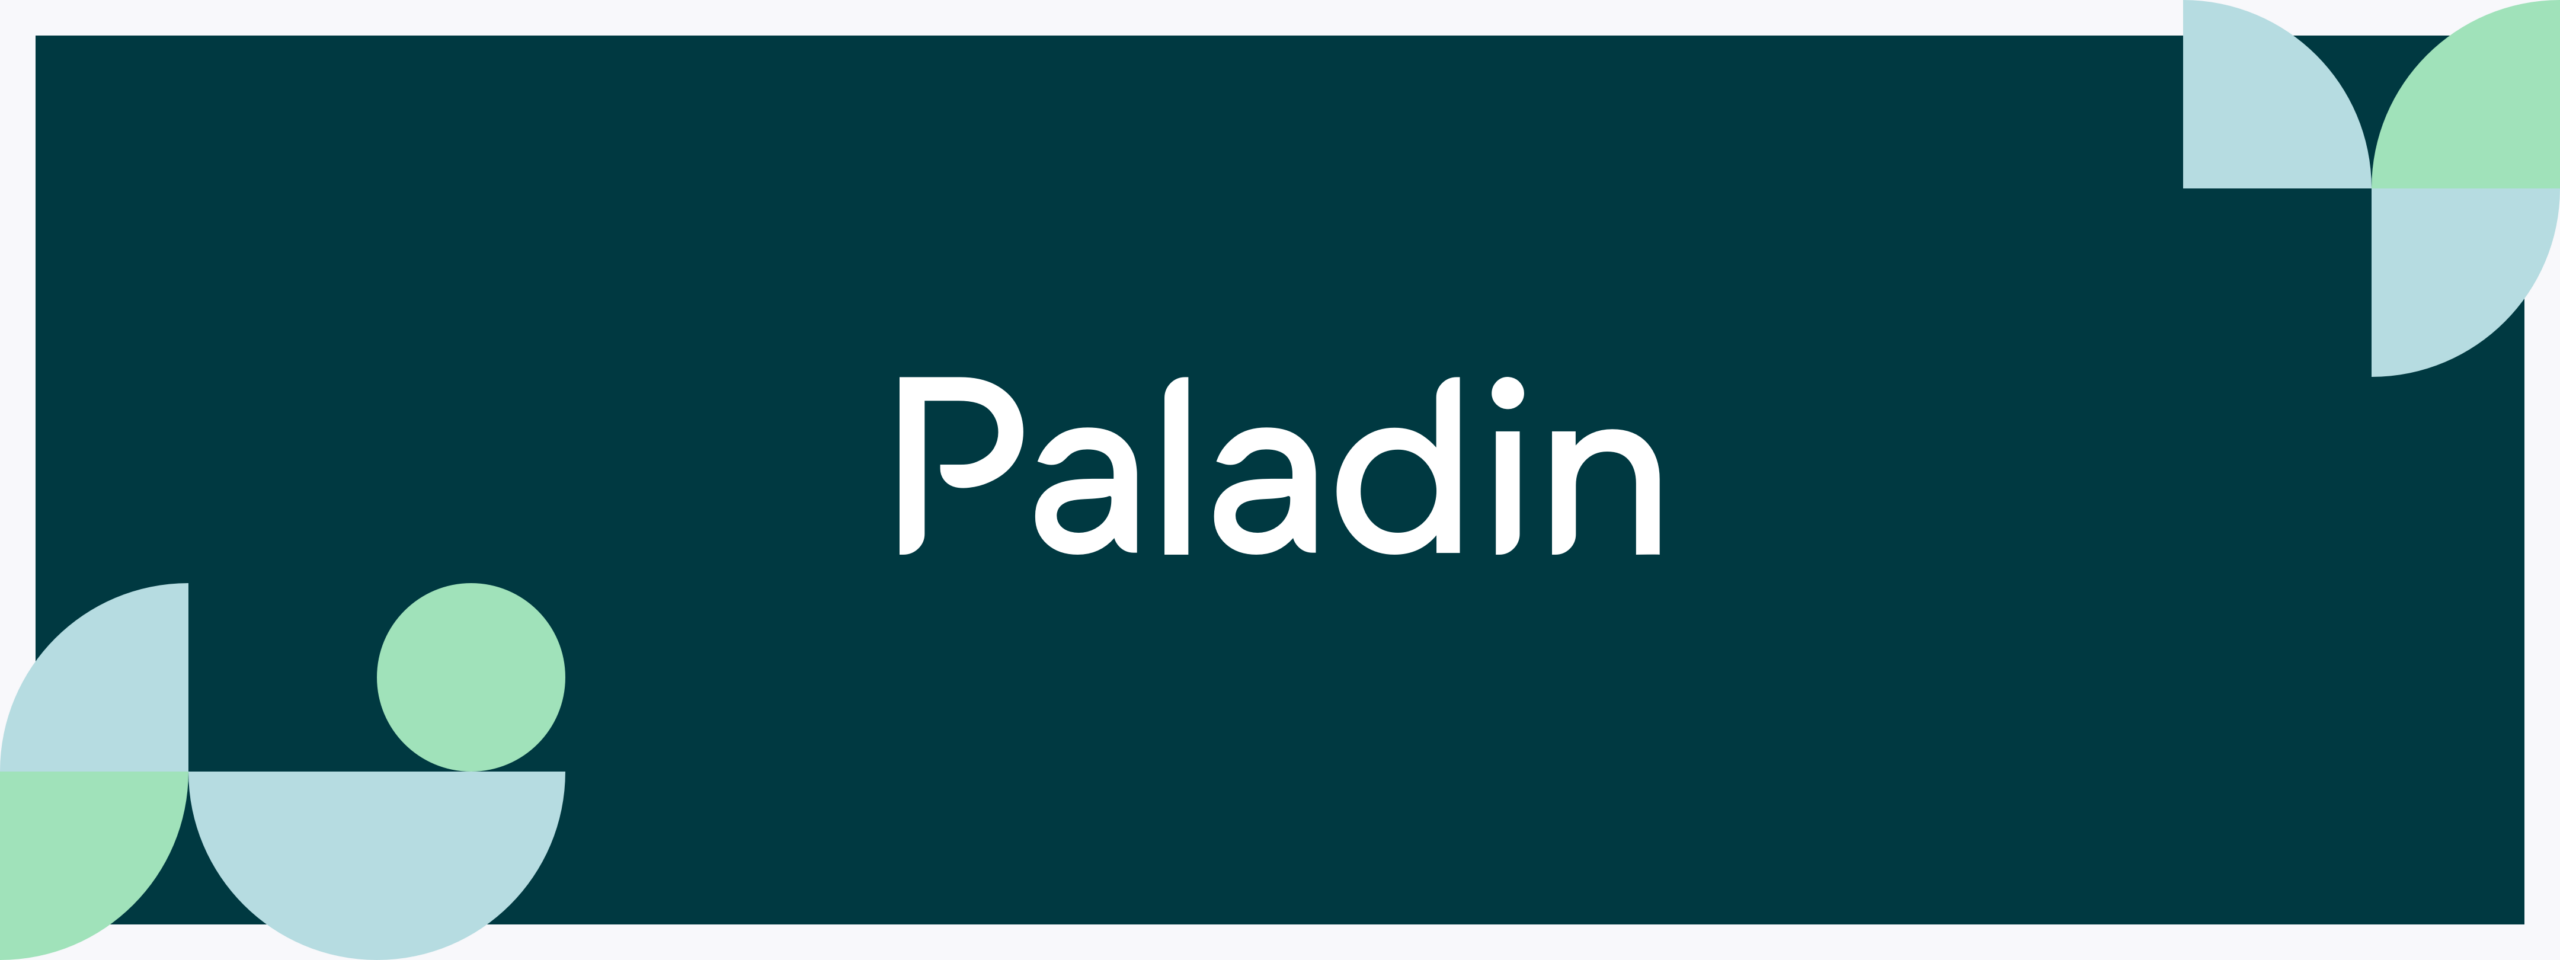 Paladin Logo and Design Elements